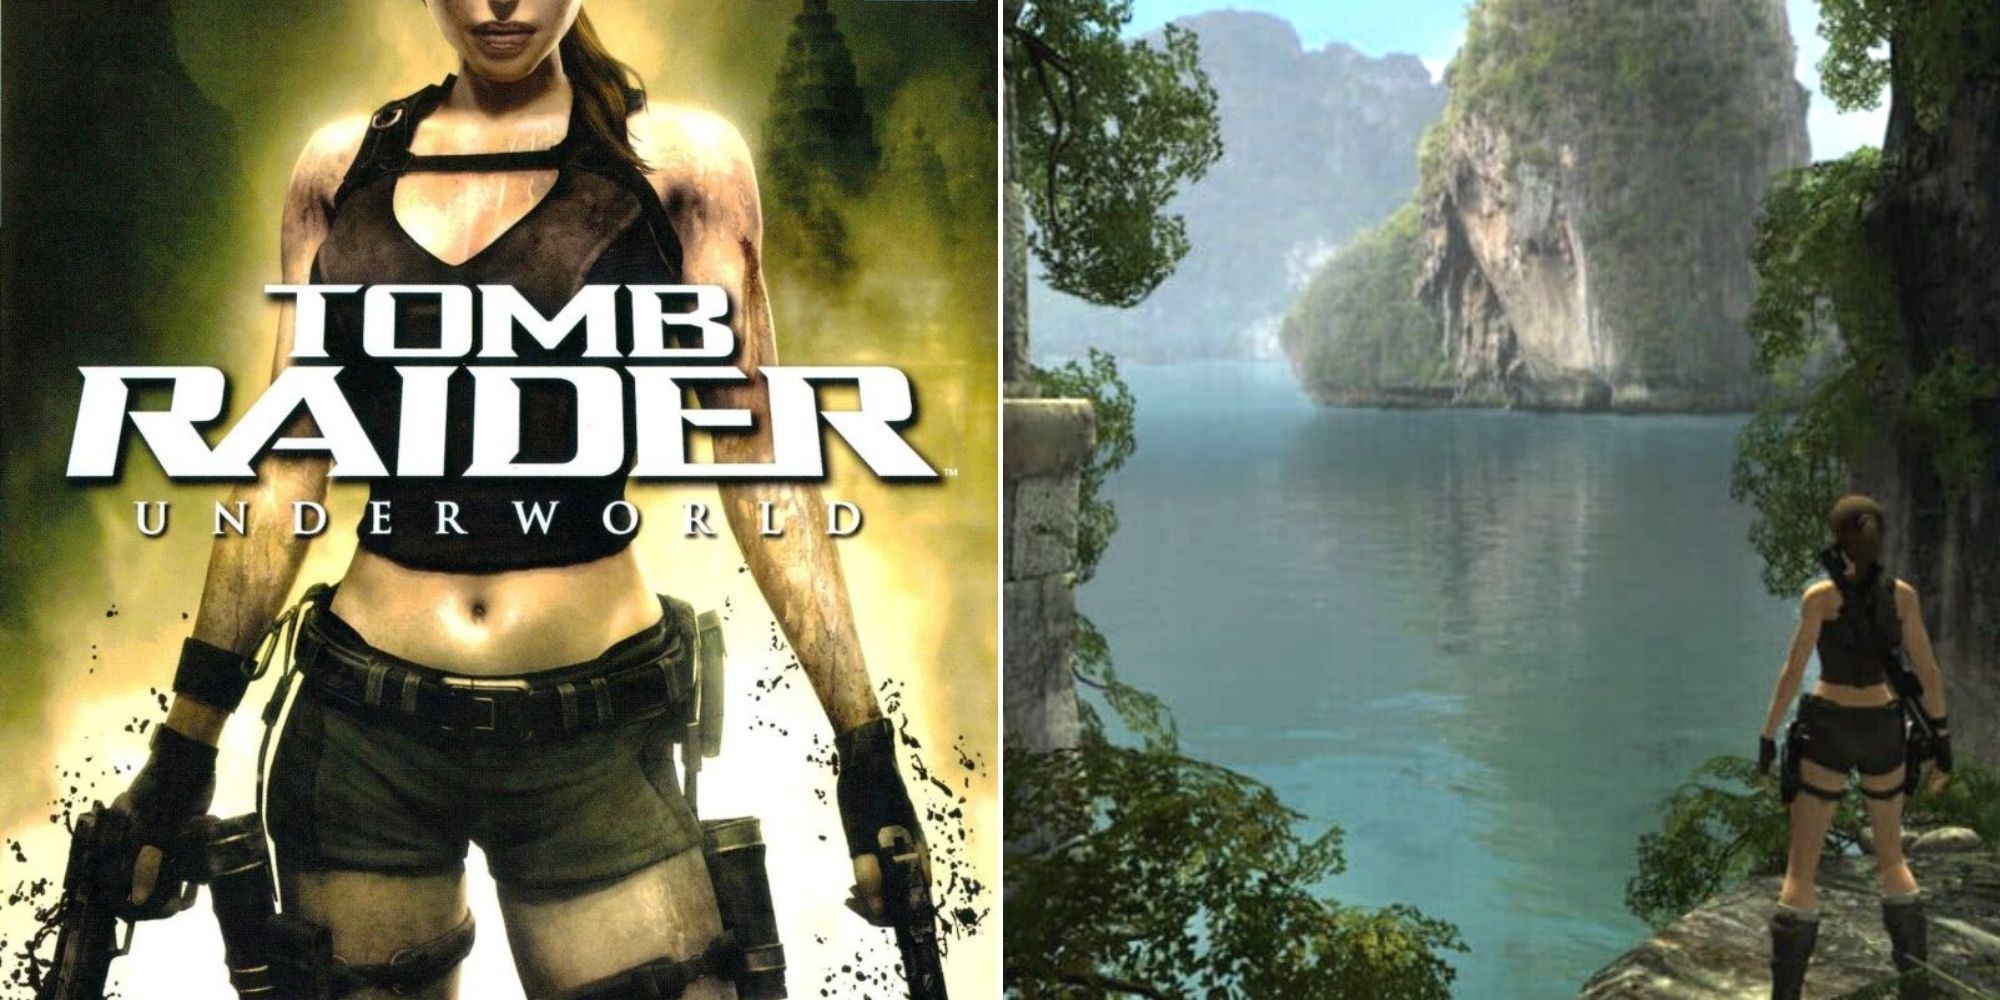 Tomb Raider: Underworld Cover Art and Lara Croft looking towards an island